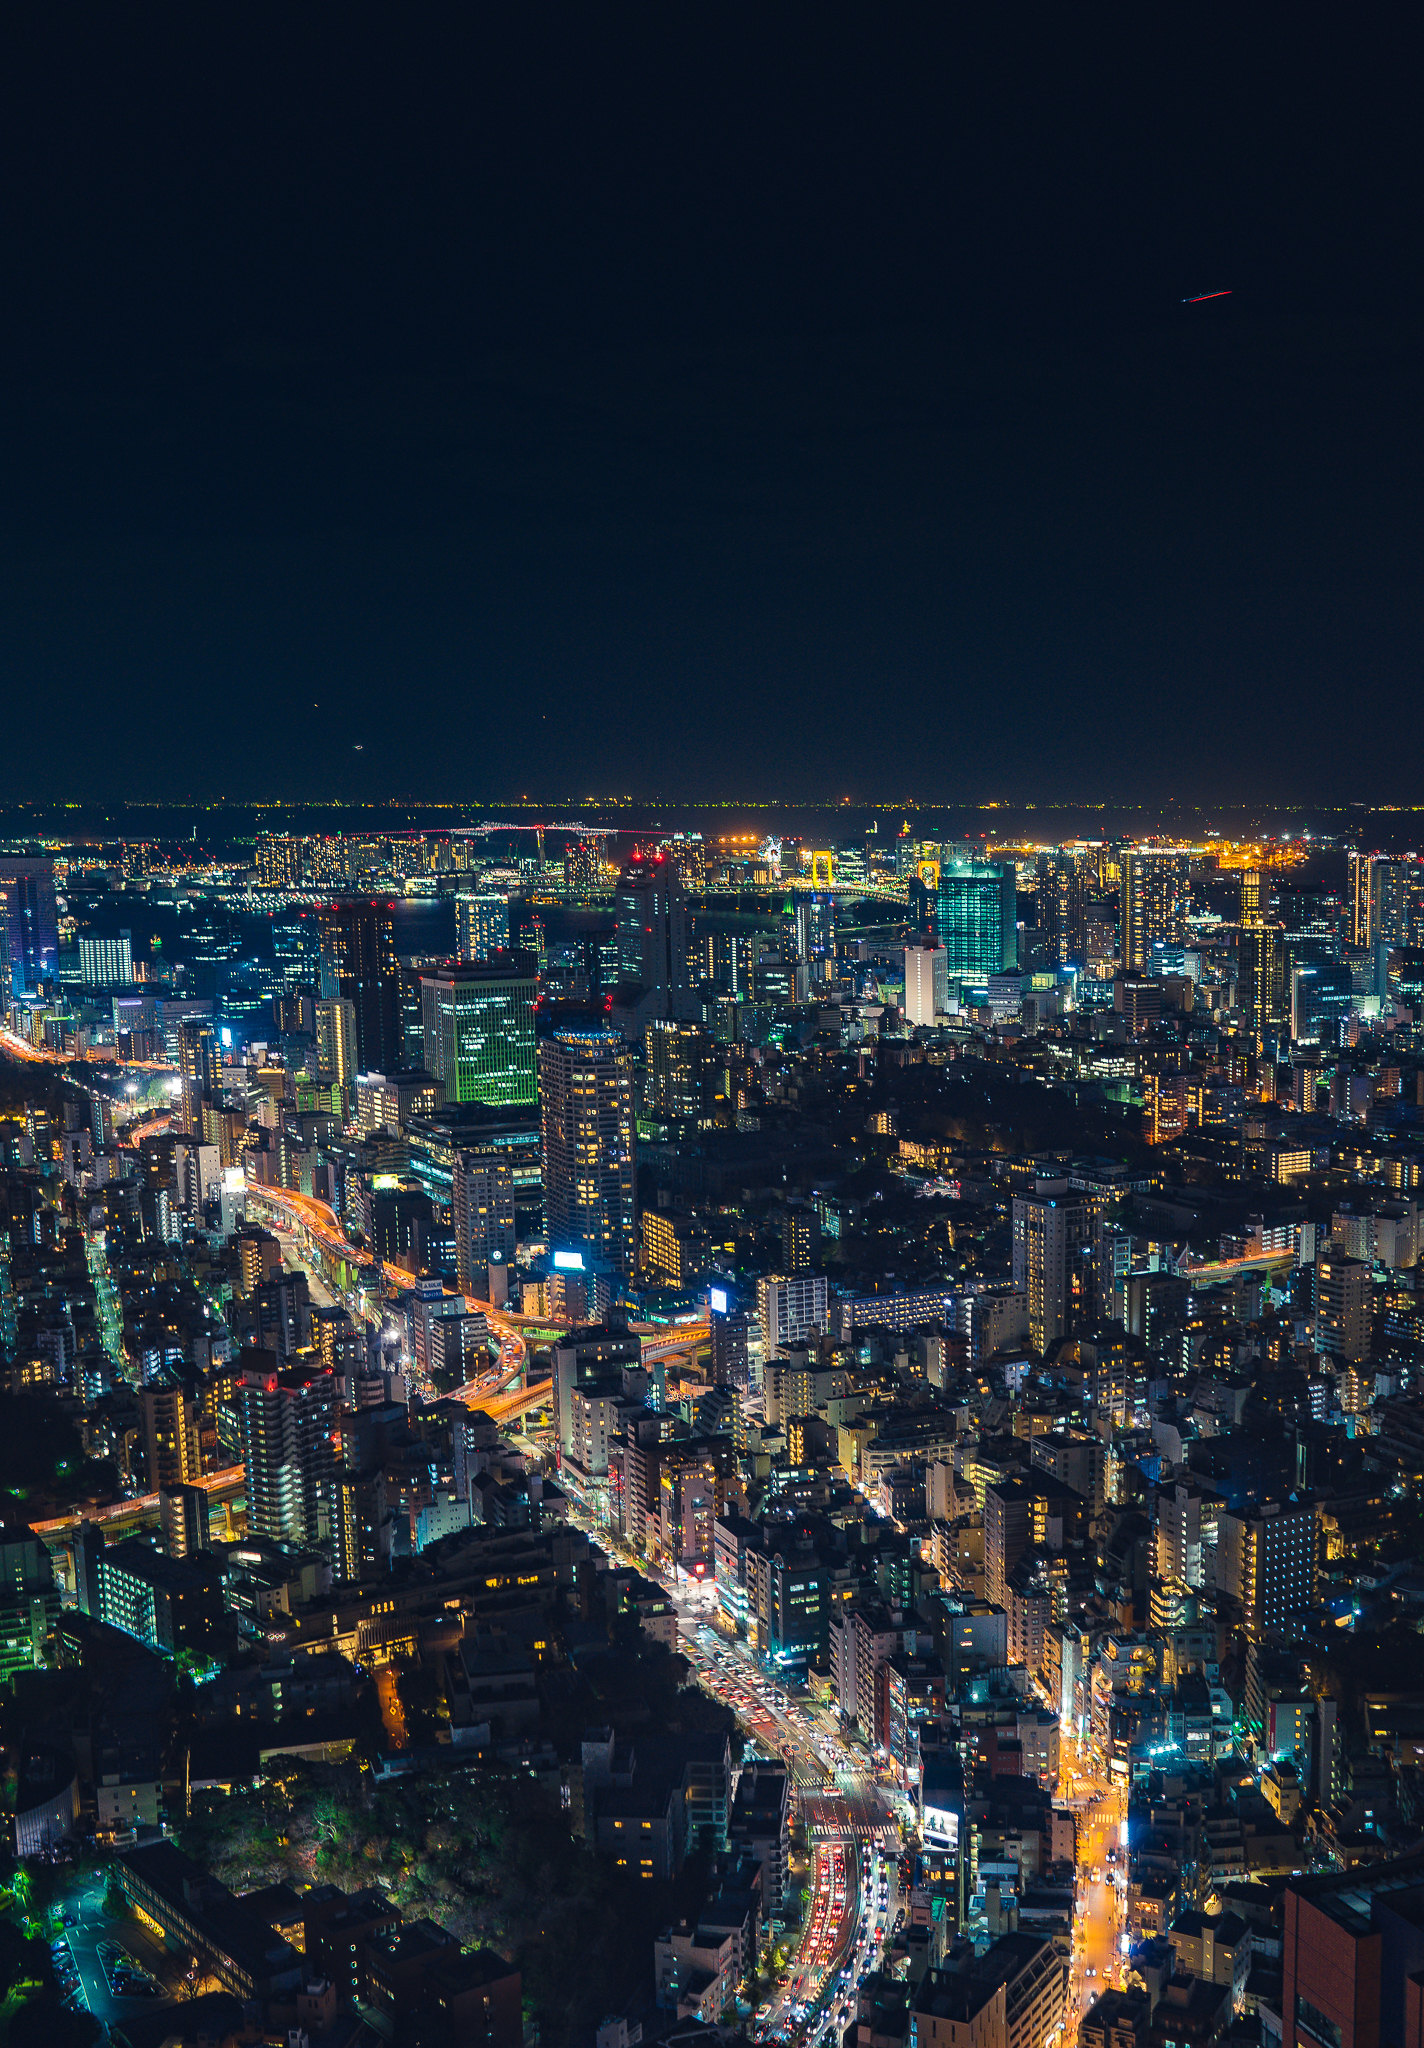 Night Glow of Tokyo